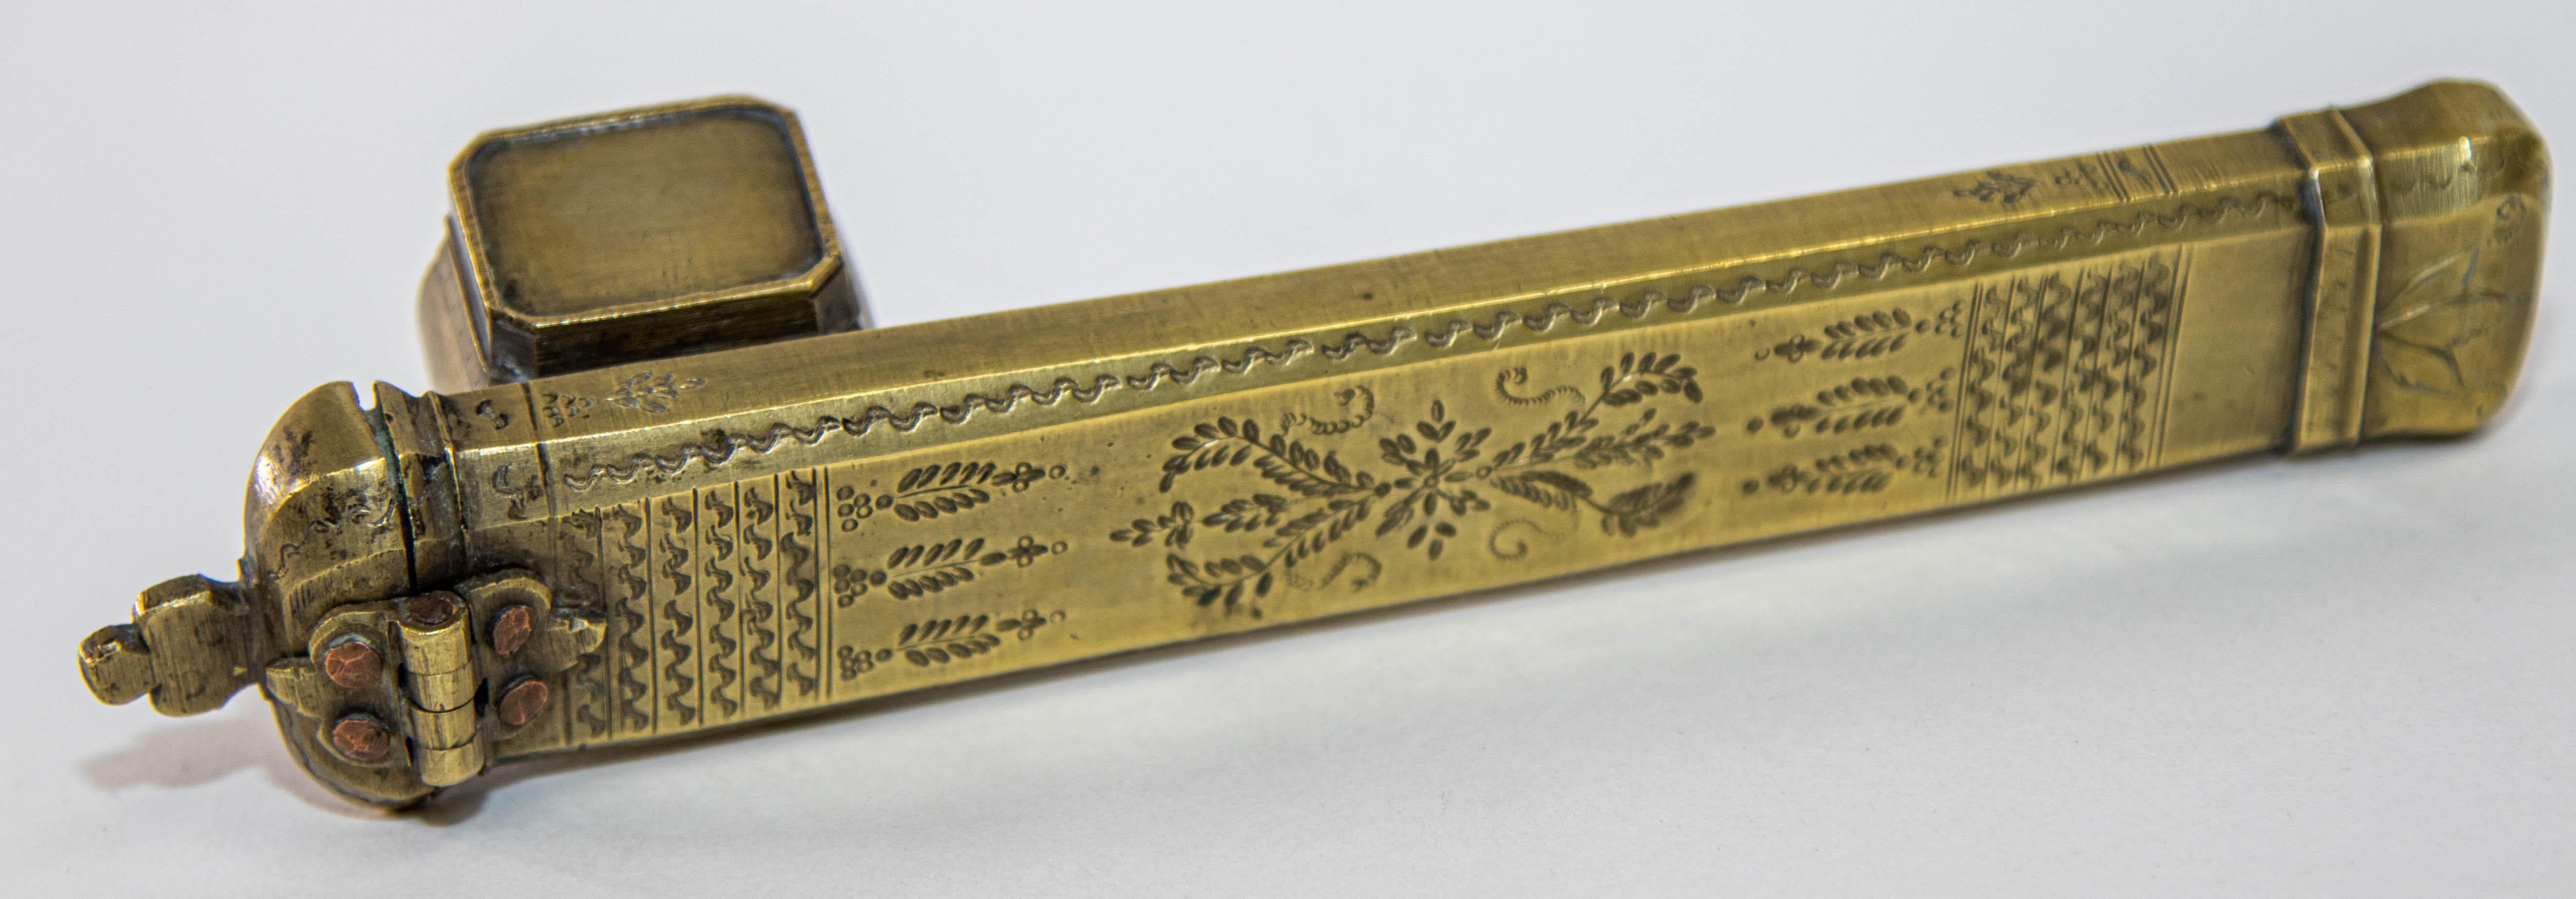 Antique Middle Eastern Islamic Brass Inkwell Qalamdan, circa 1850 For Sale 6